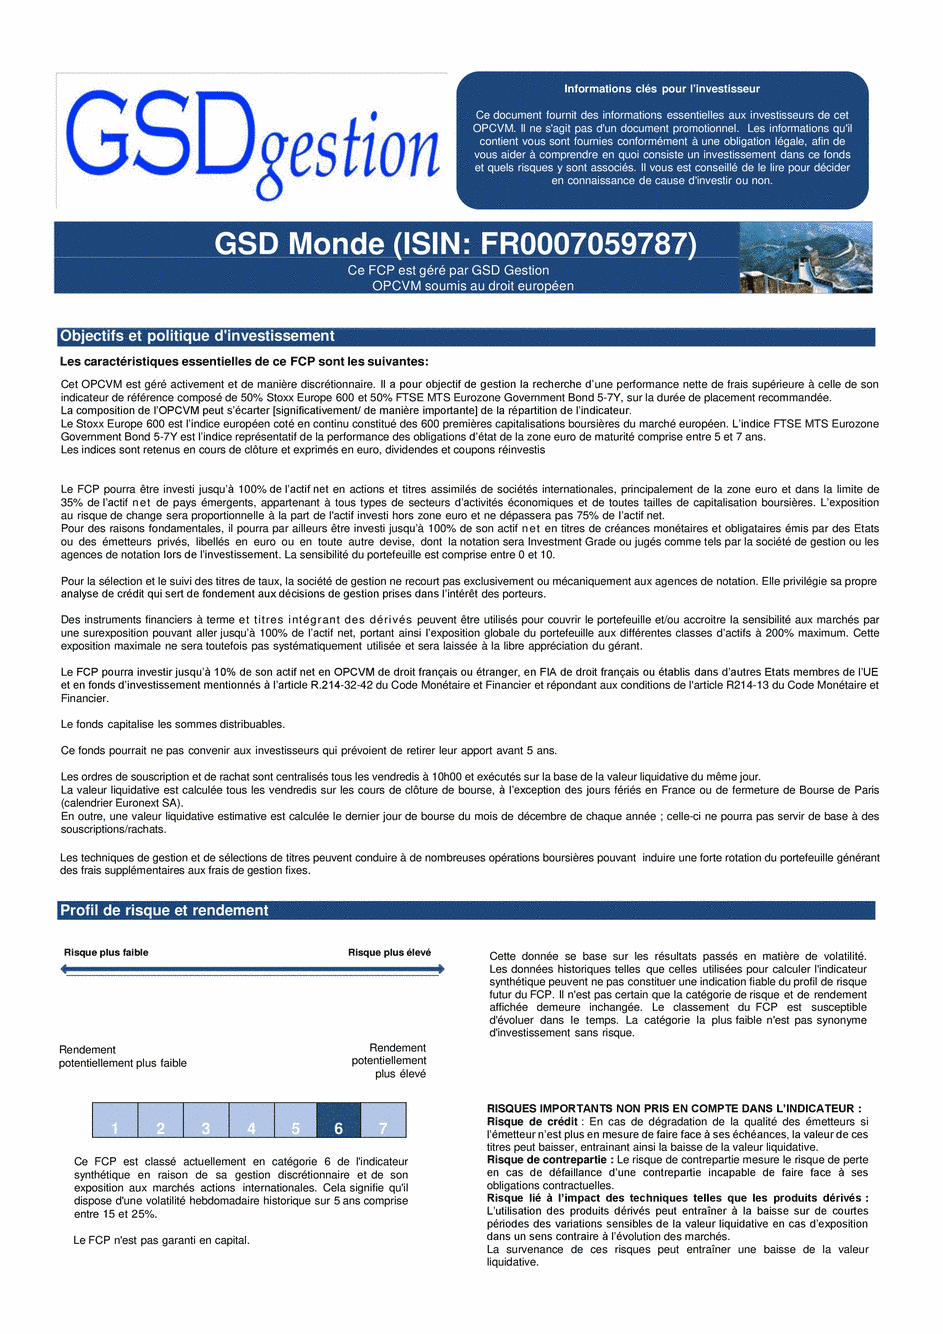 DICI-Prospectus GSD Monde - 15/02/2021 - Français